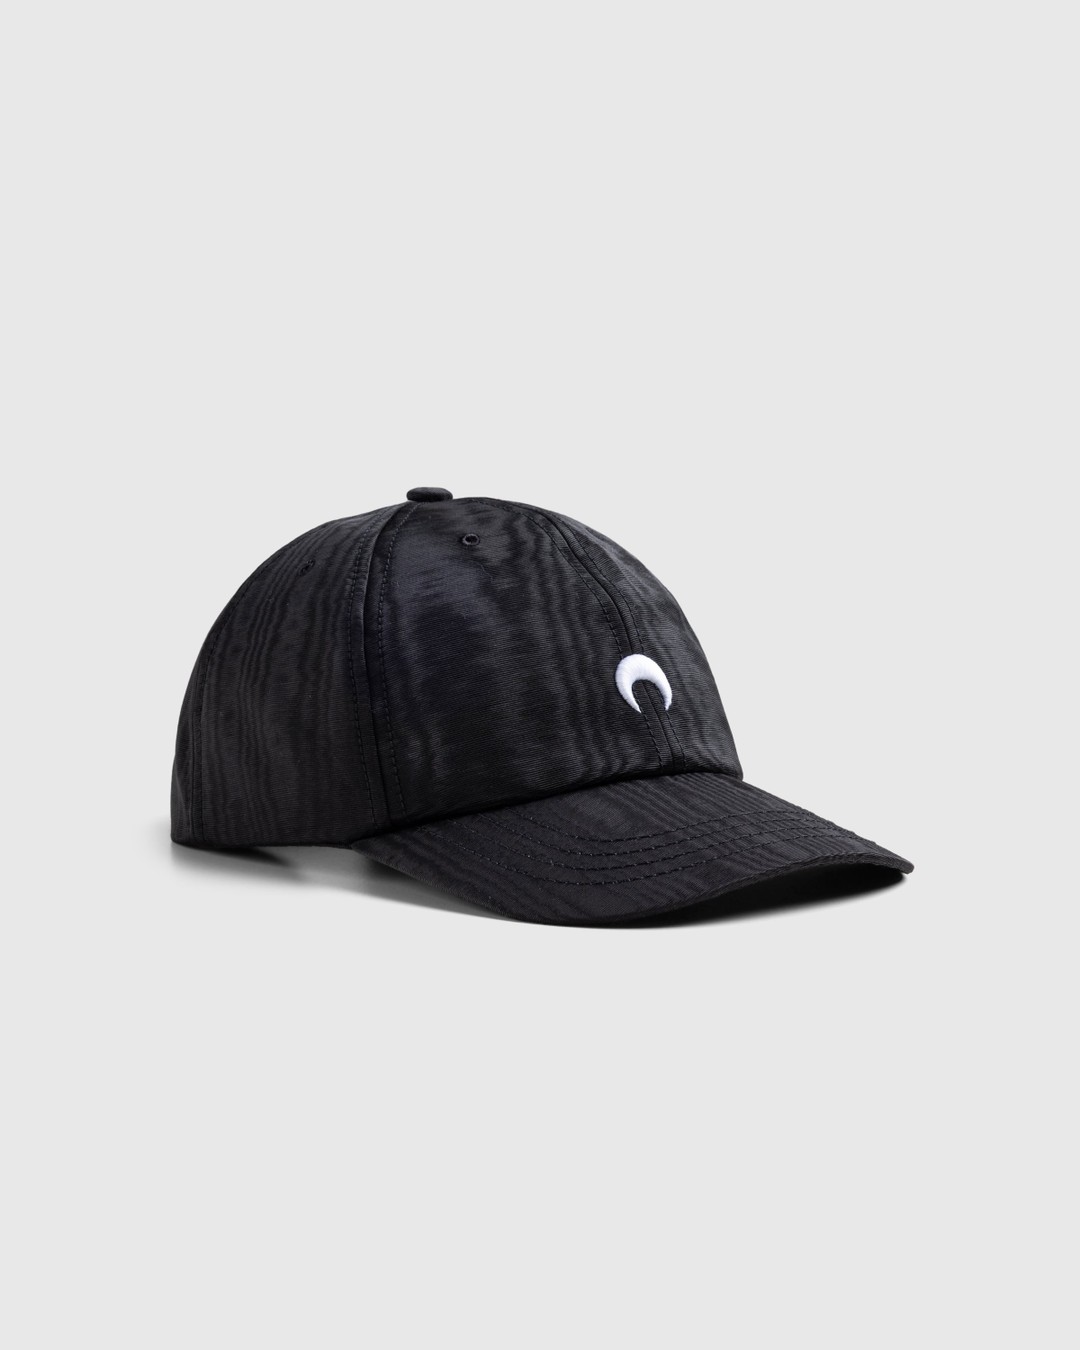 Marine Serre – Embroidered Regenerated Moire Cap Black - Hats - Black - Image 1